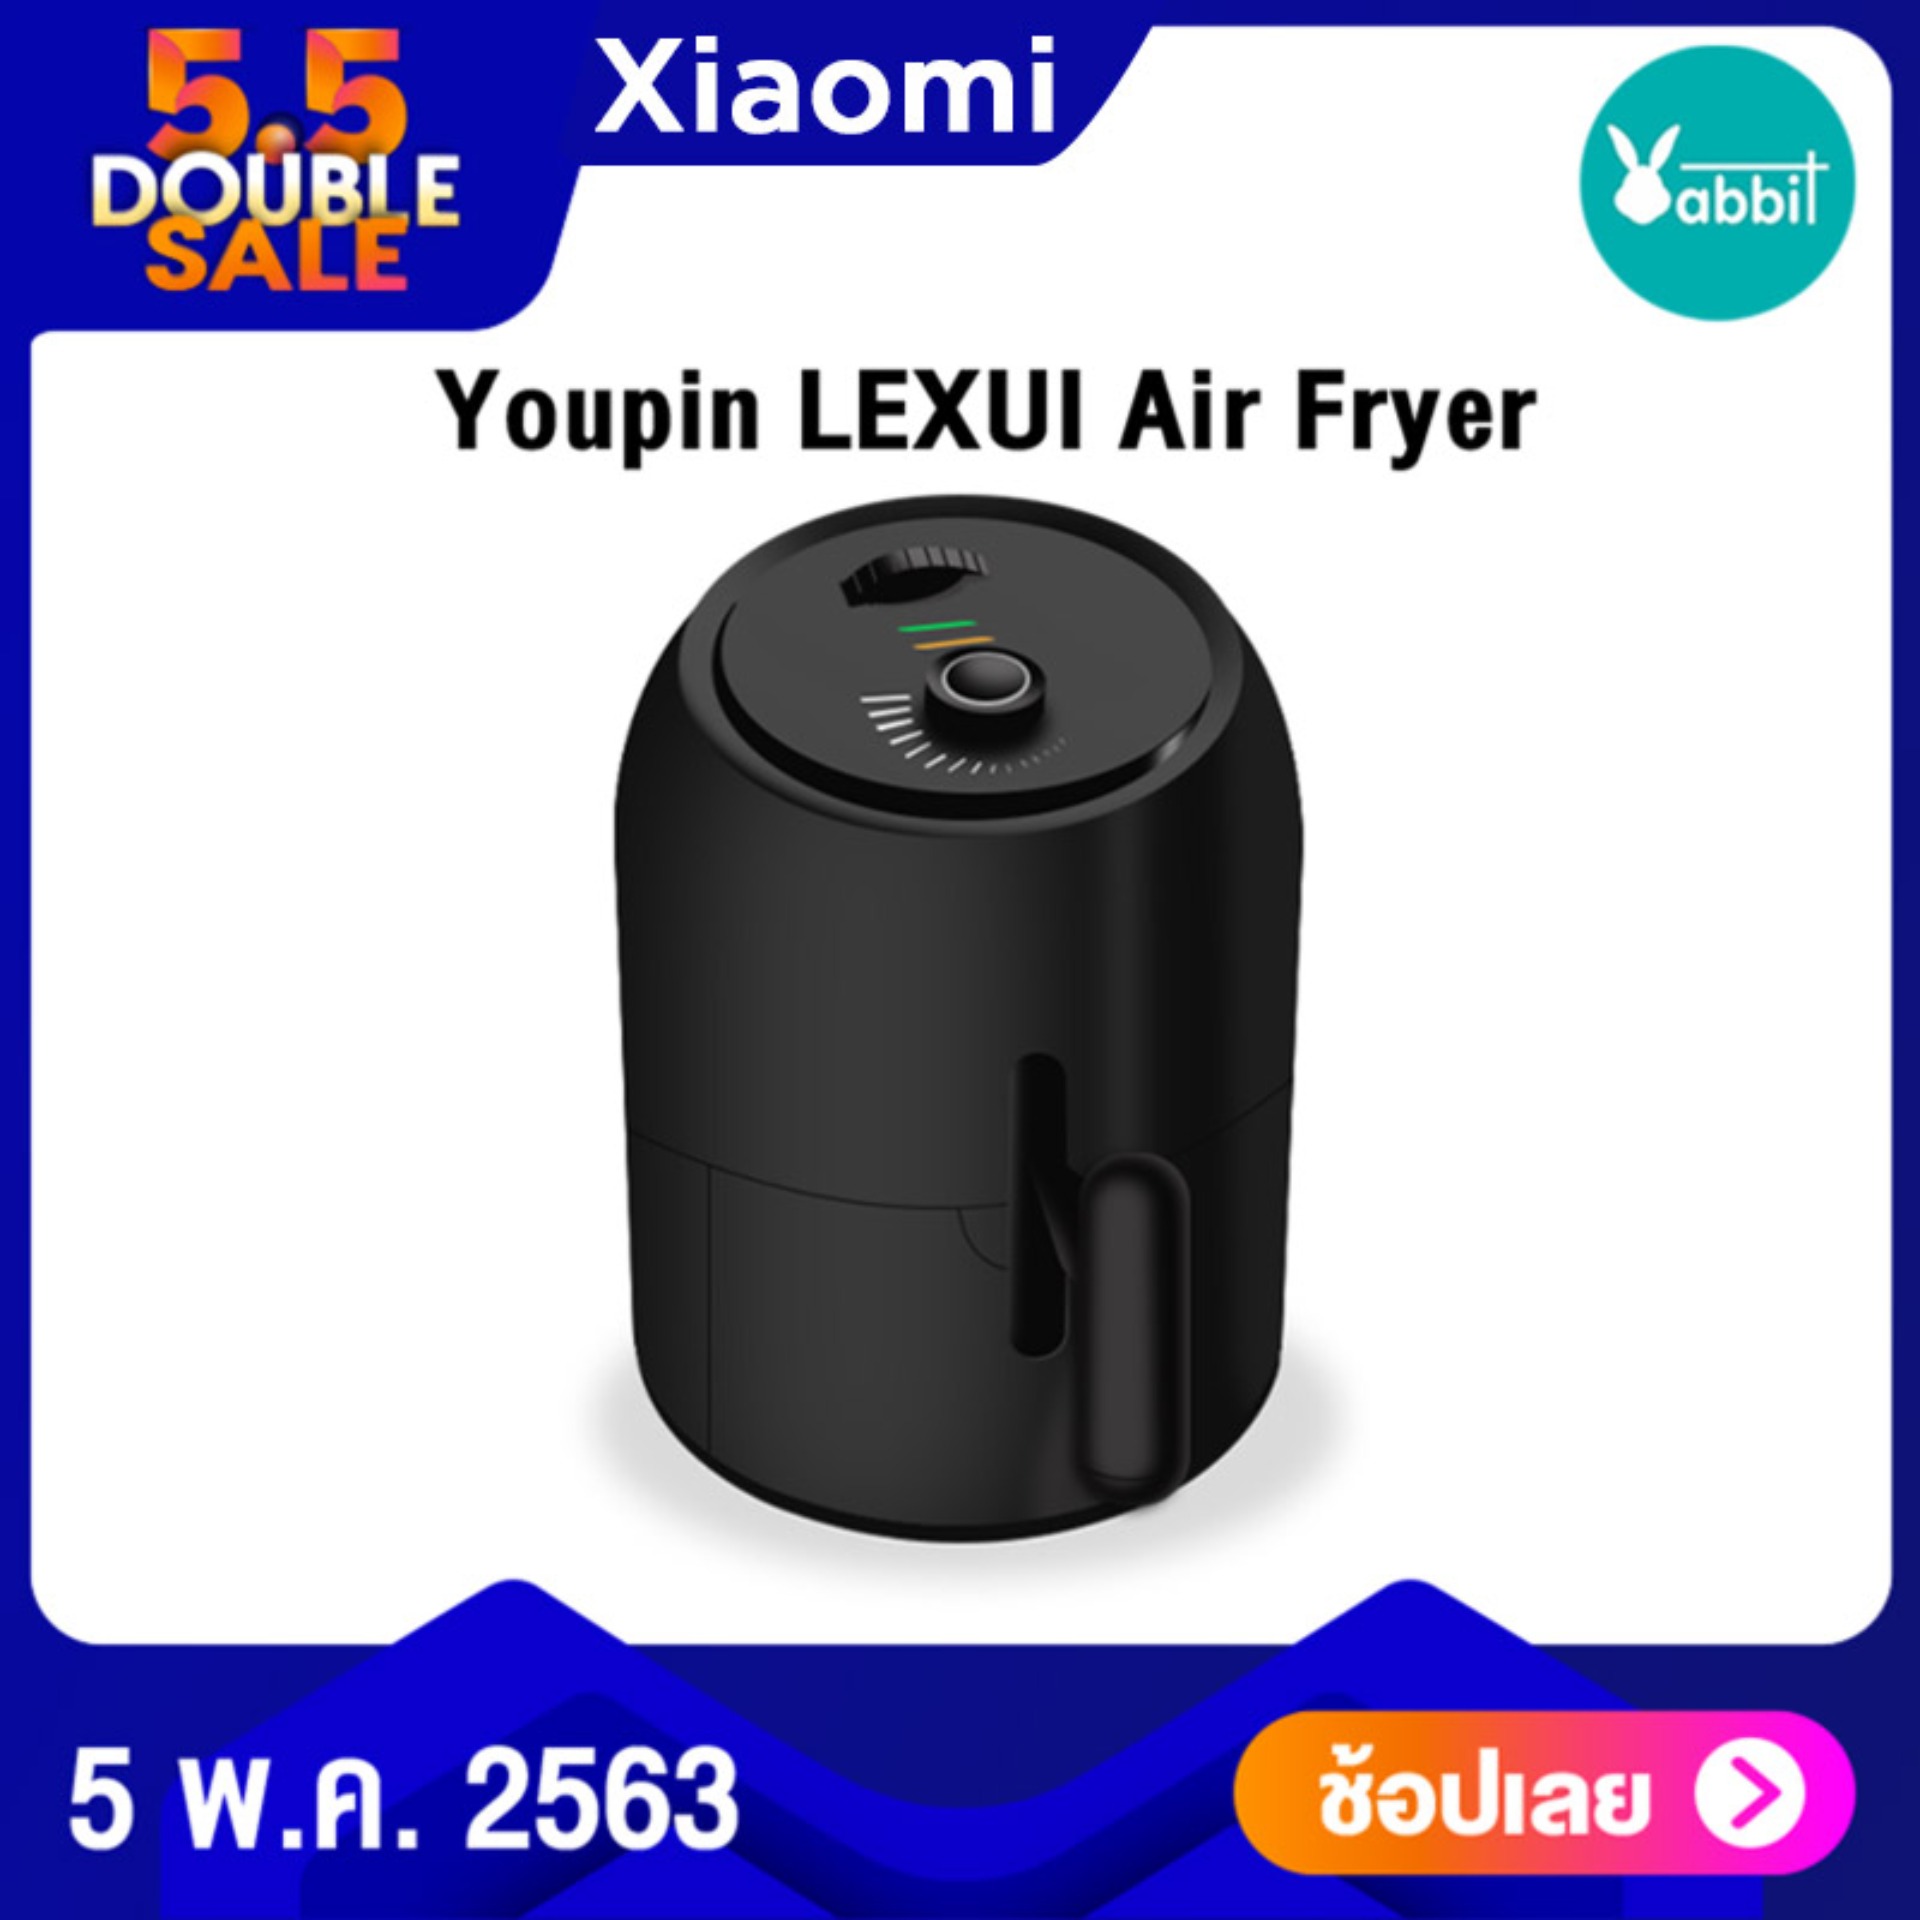 Xiaomi Youpin LeXiu Air Fryer หม้อทอดไฟฟ้า หม้อทอดไร้น้ำมัน ดีต่อสุขภาพ จุ 2 ลิตร